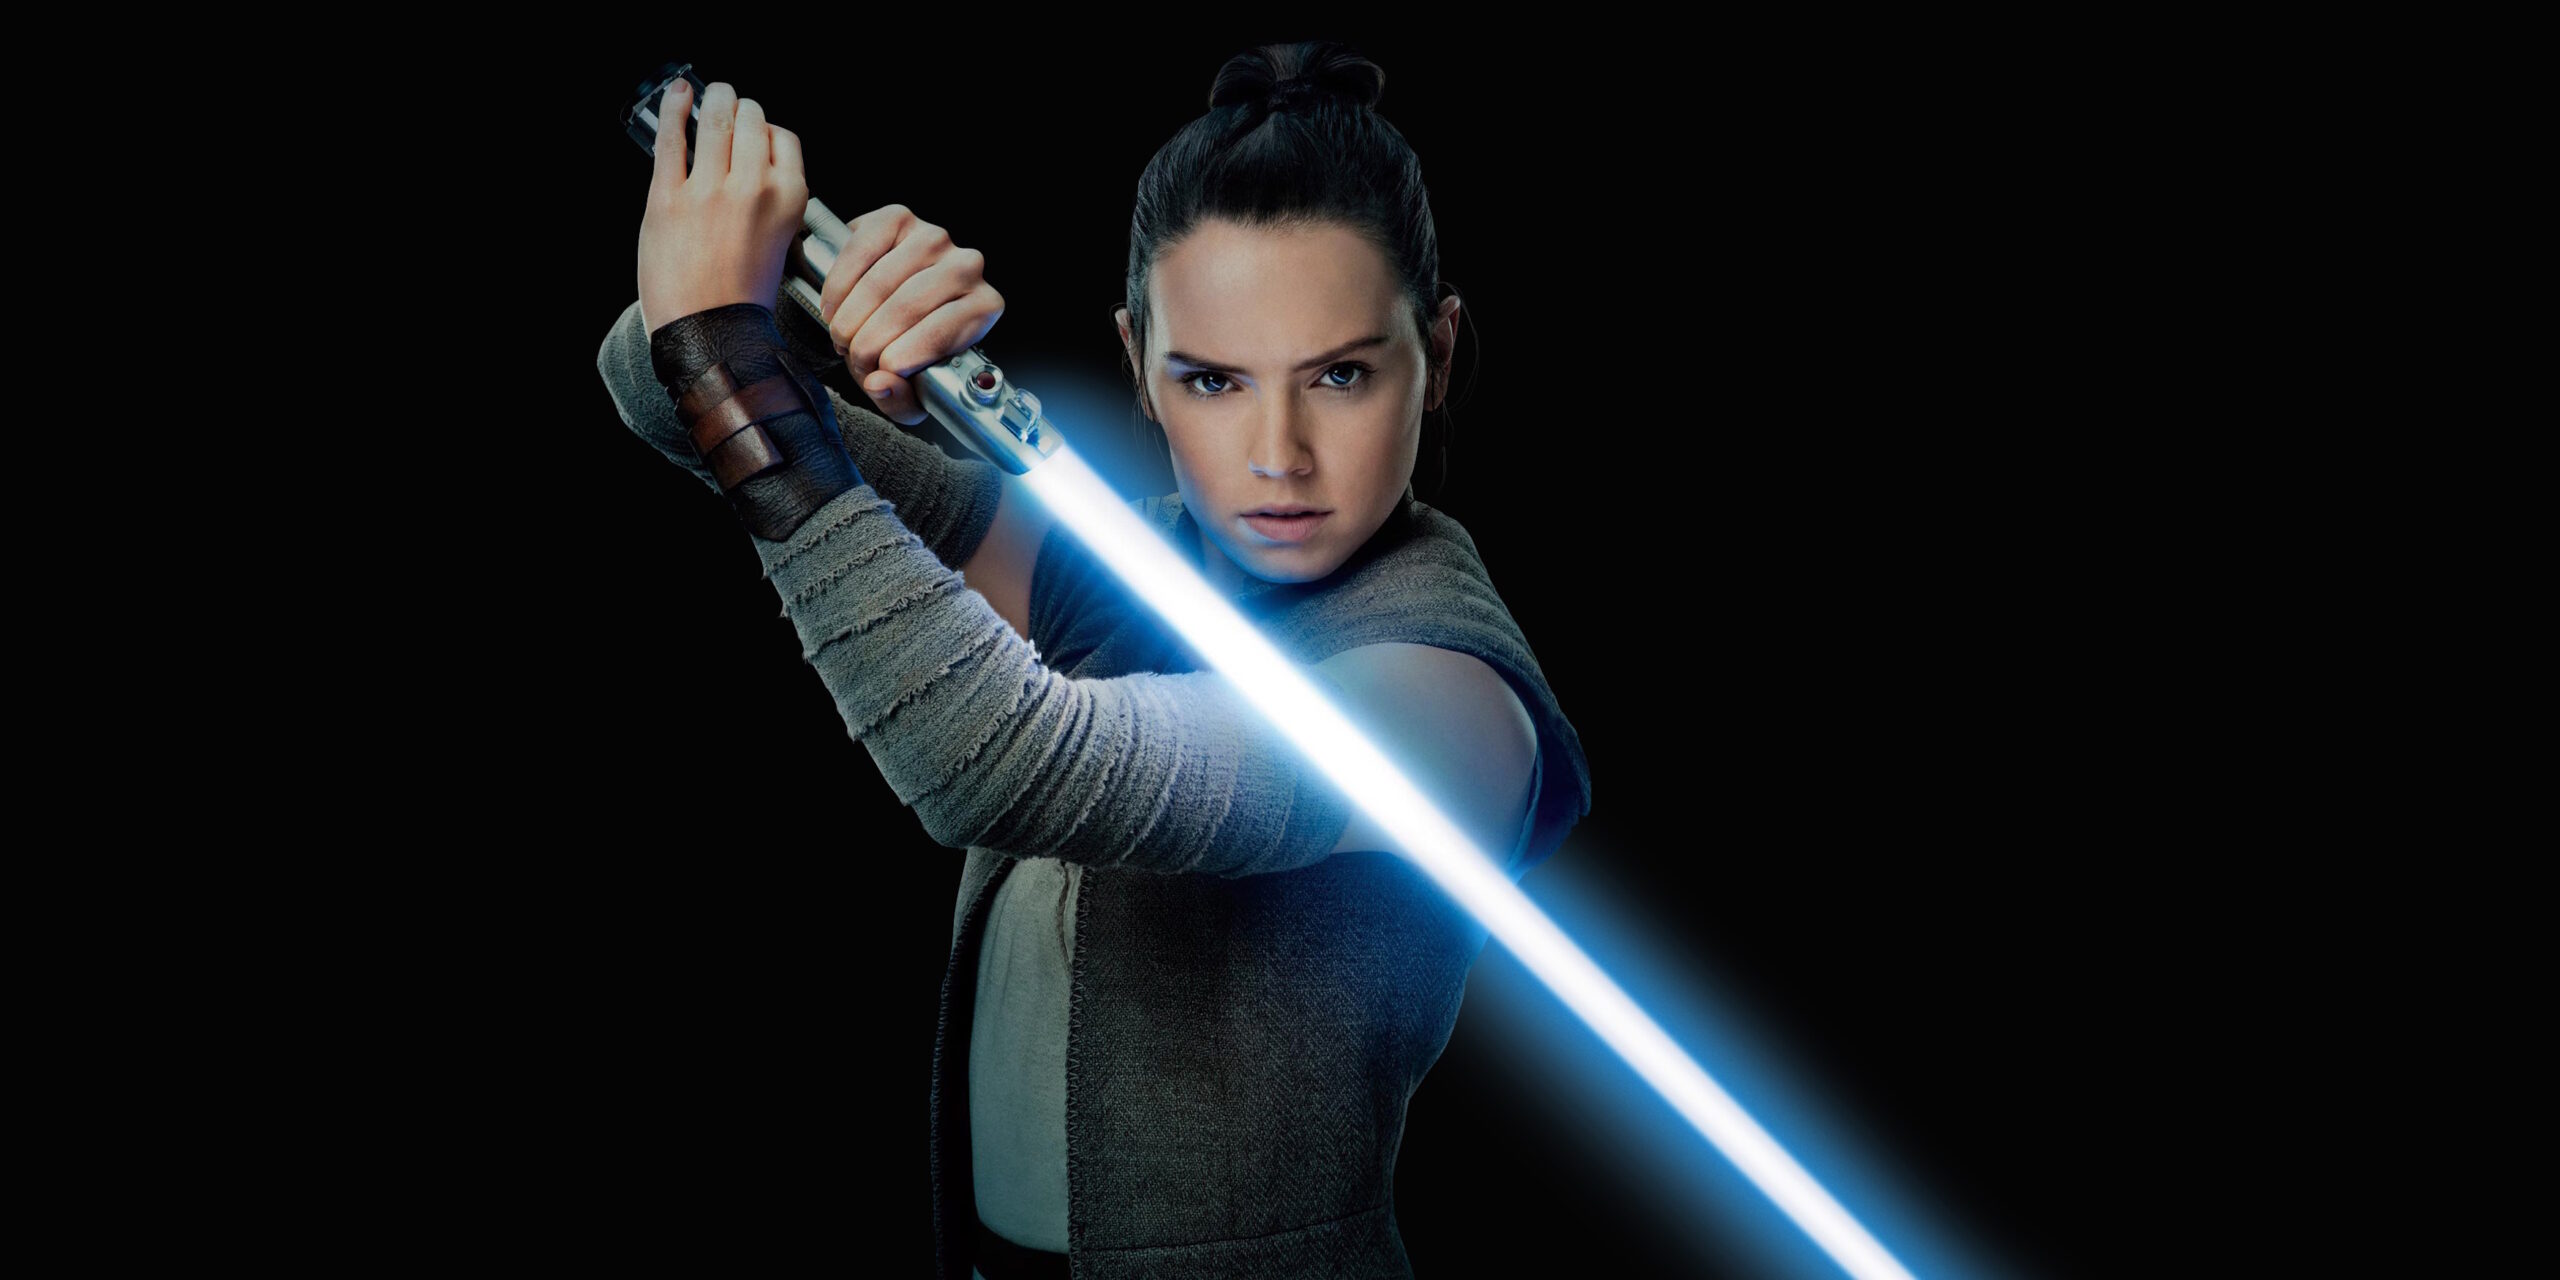 Star Wars Rey Sequel Casting Three Major Roles | Barside Buzz